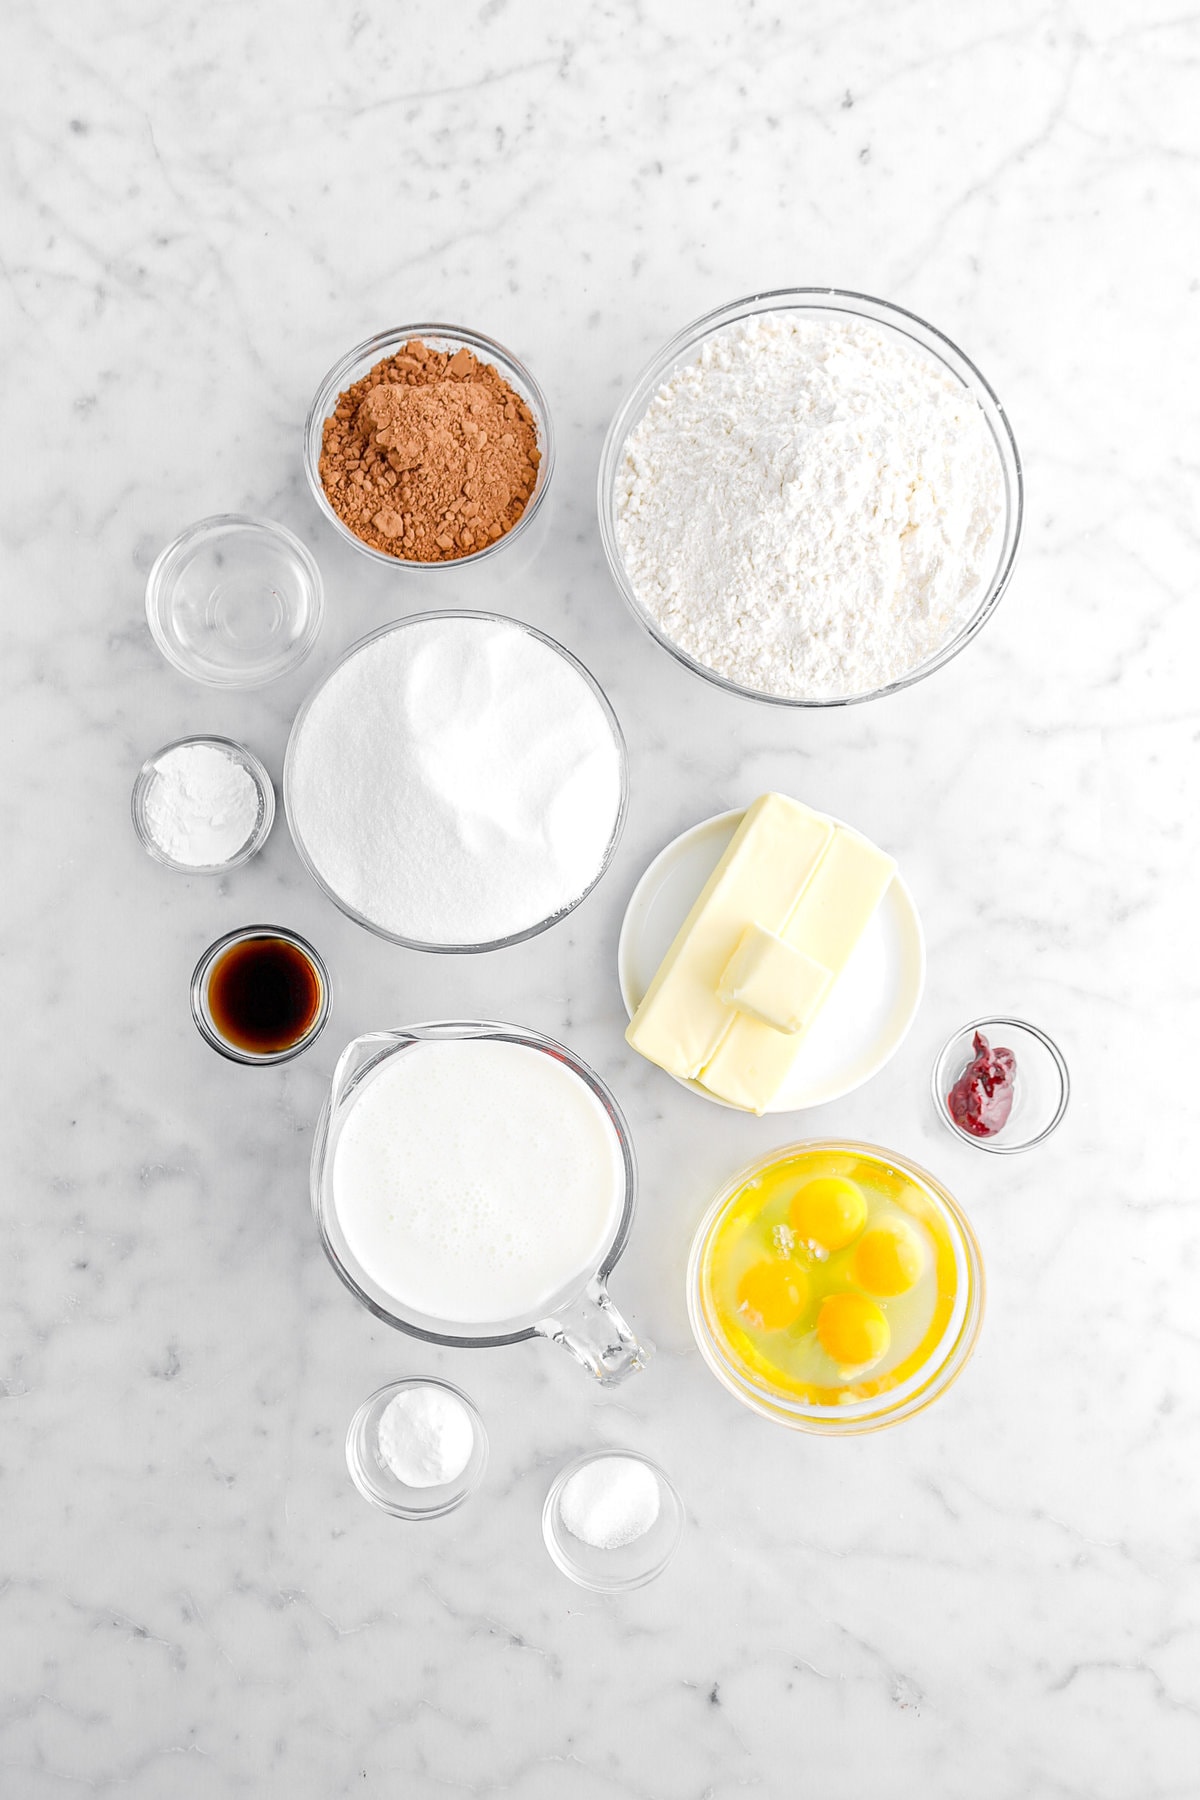 flour, cocoa powder, vinegar, sugar, baking soda, vanilla, butter, red food dye, milk, eggs, baking powder, and salt on marble surface.